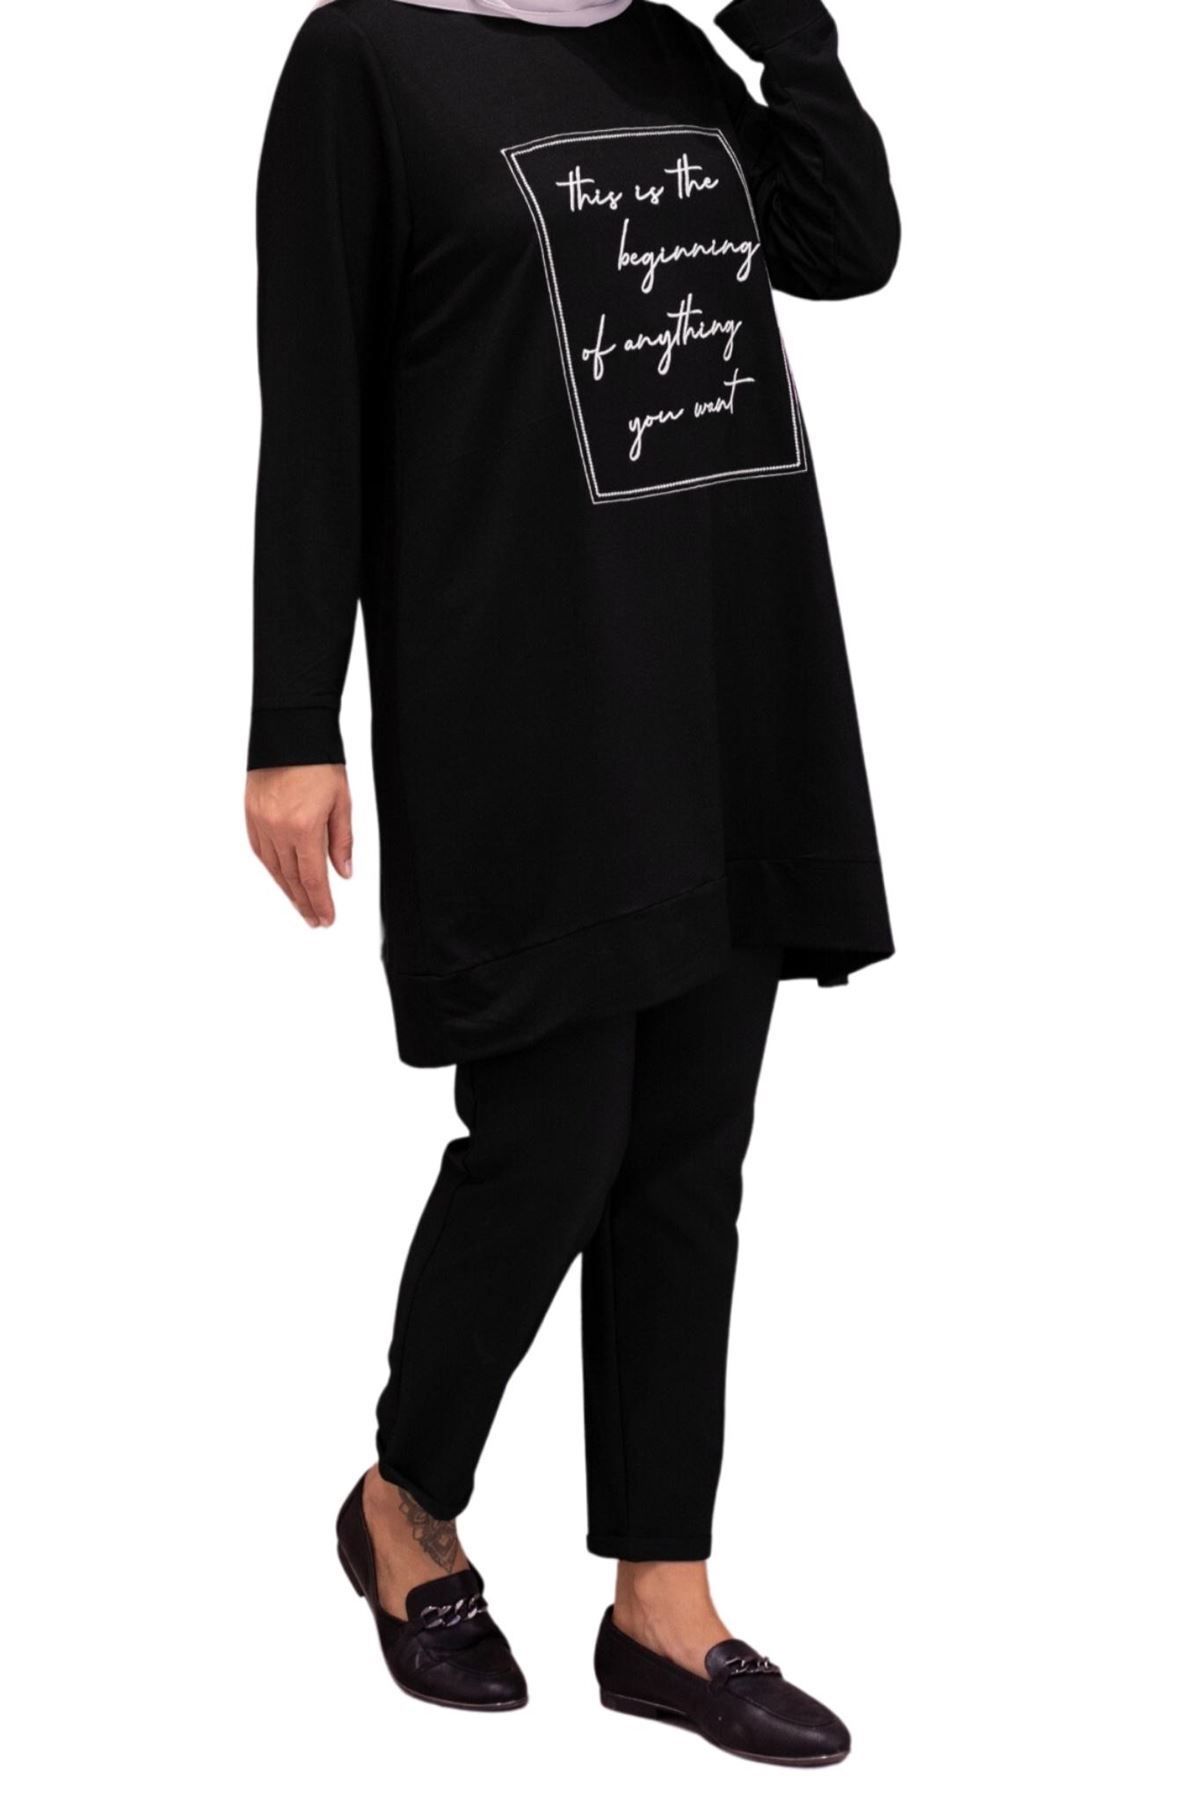 ottoman wear OTW20025 İki İplik Tunik Siyah